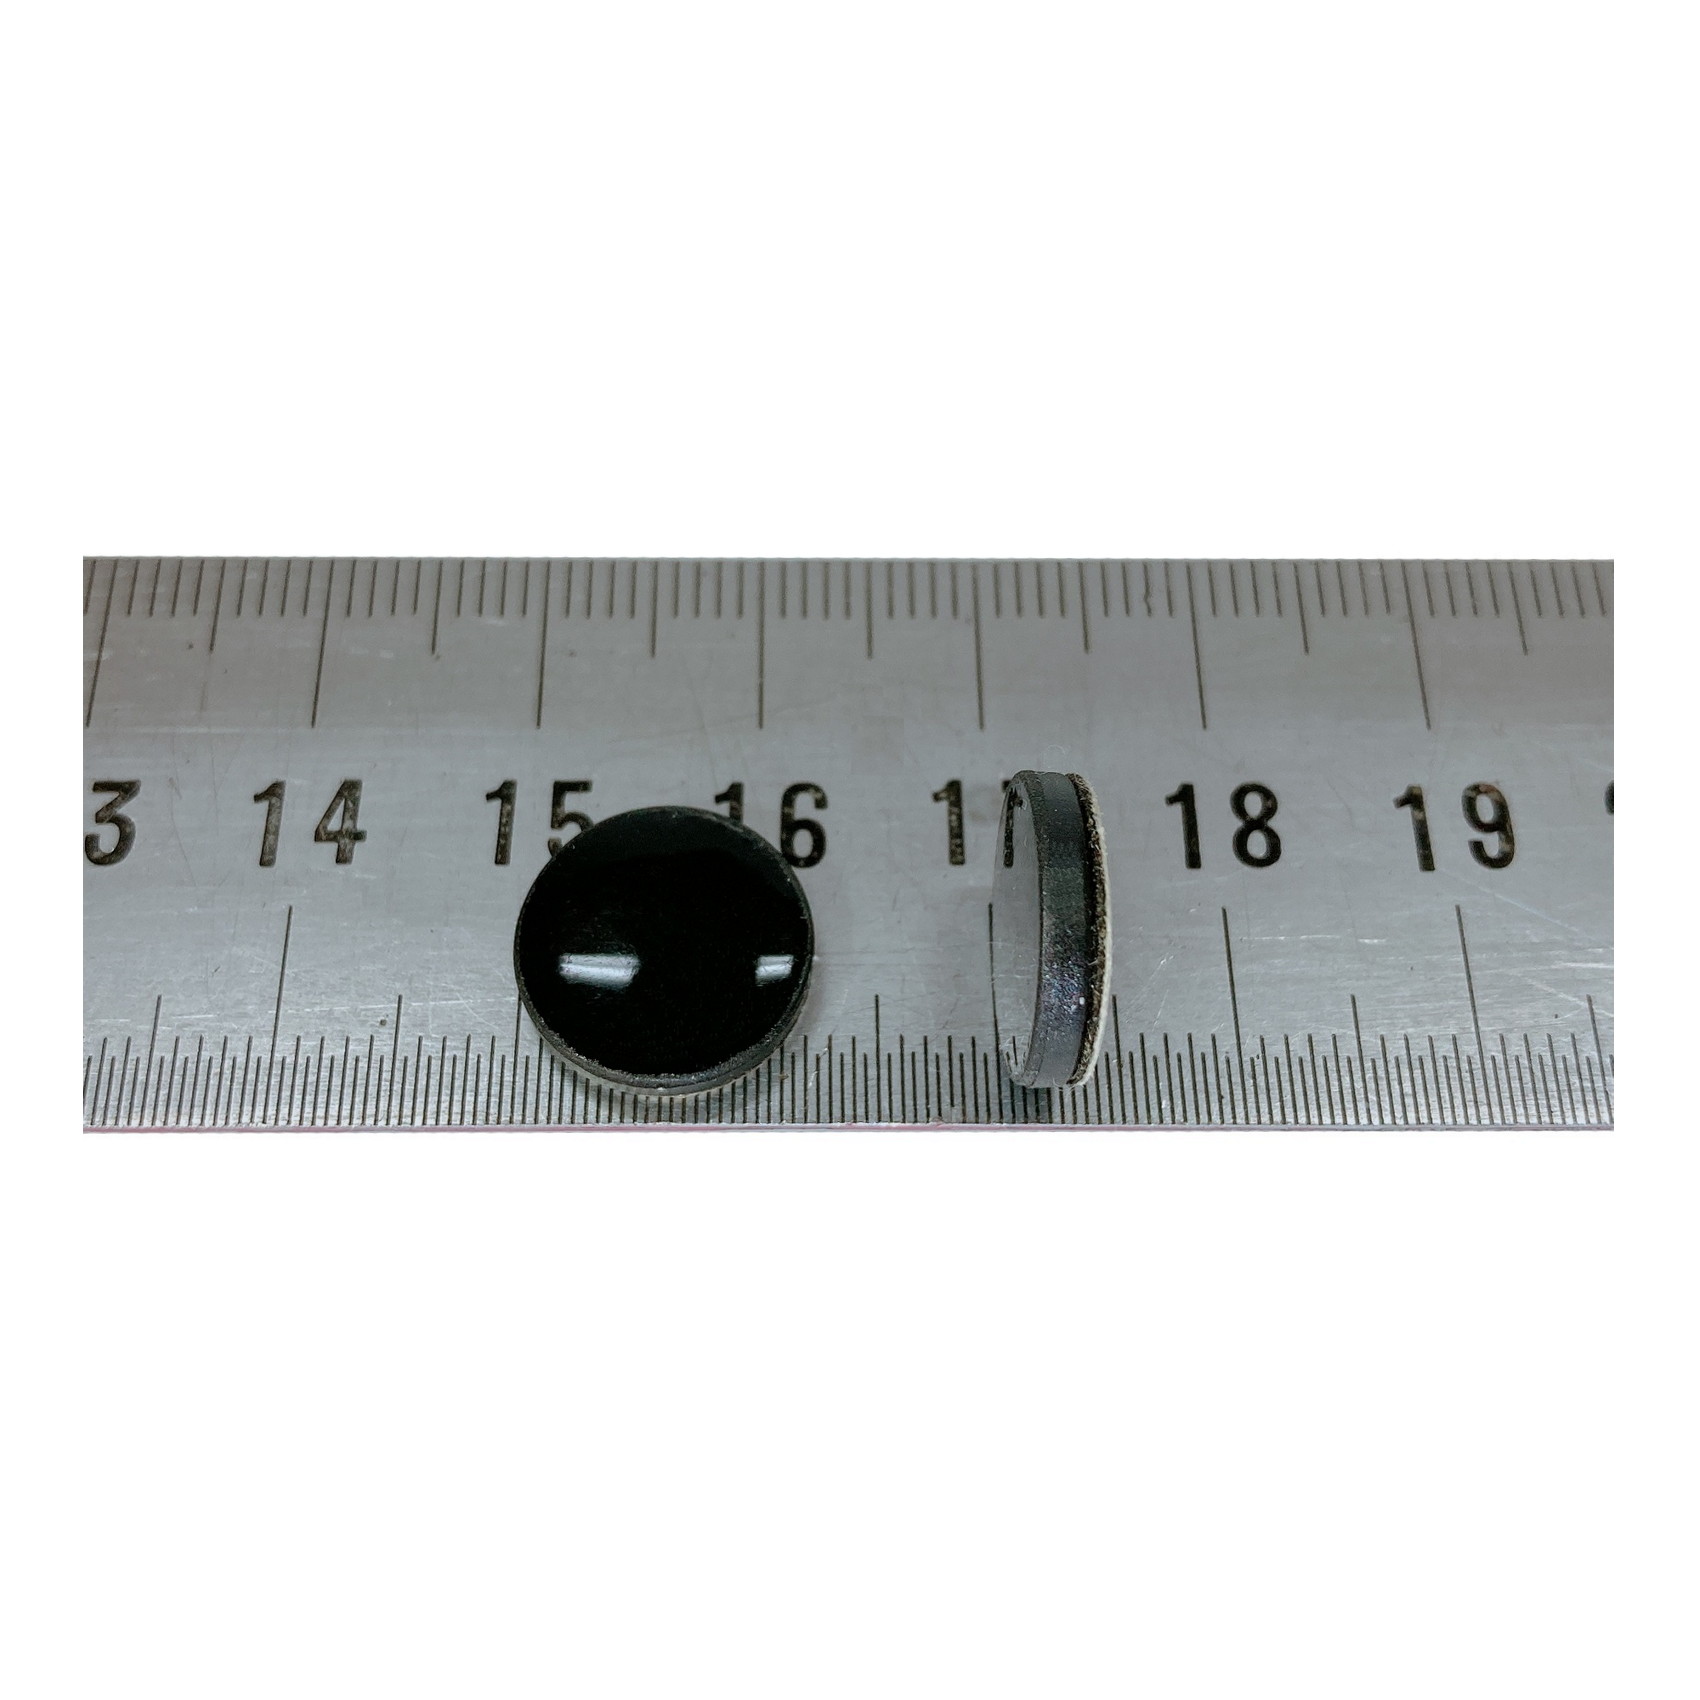 DOT12, 12mm industrial RFID tag